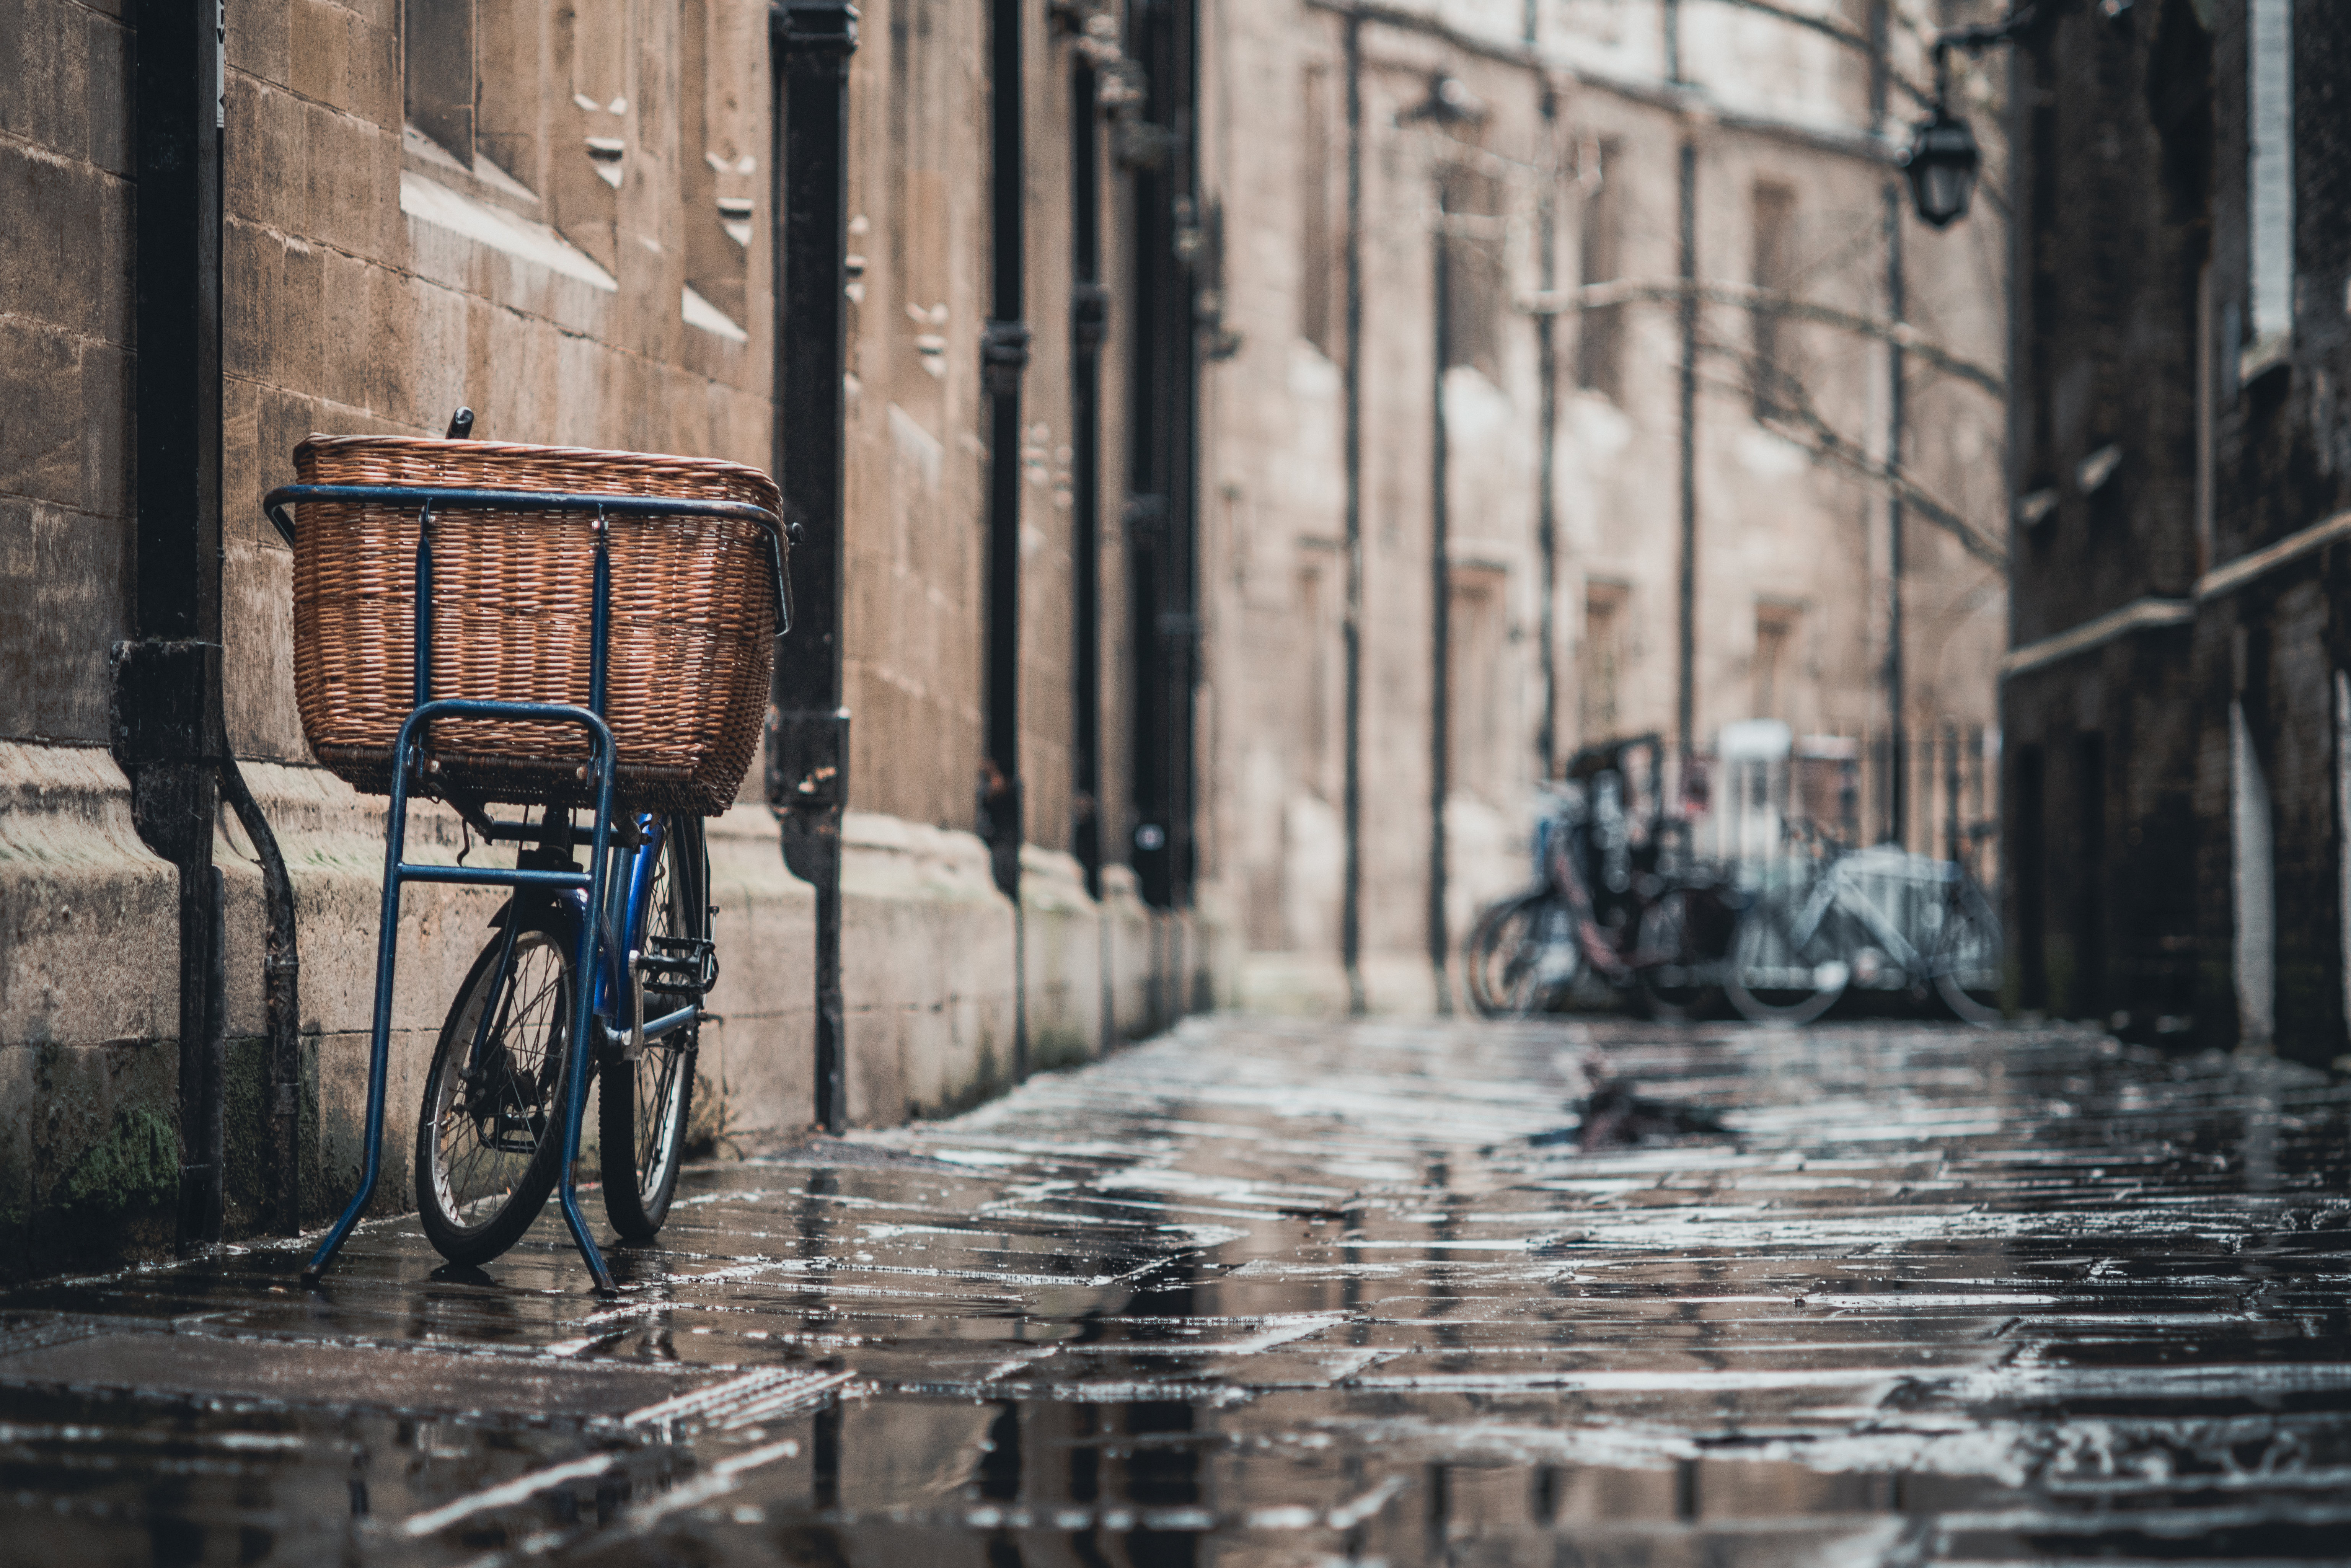 General 6144x4098 rain street bicycle baskets urban outdoors